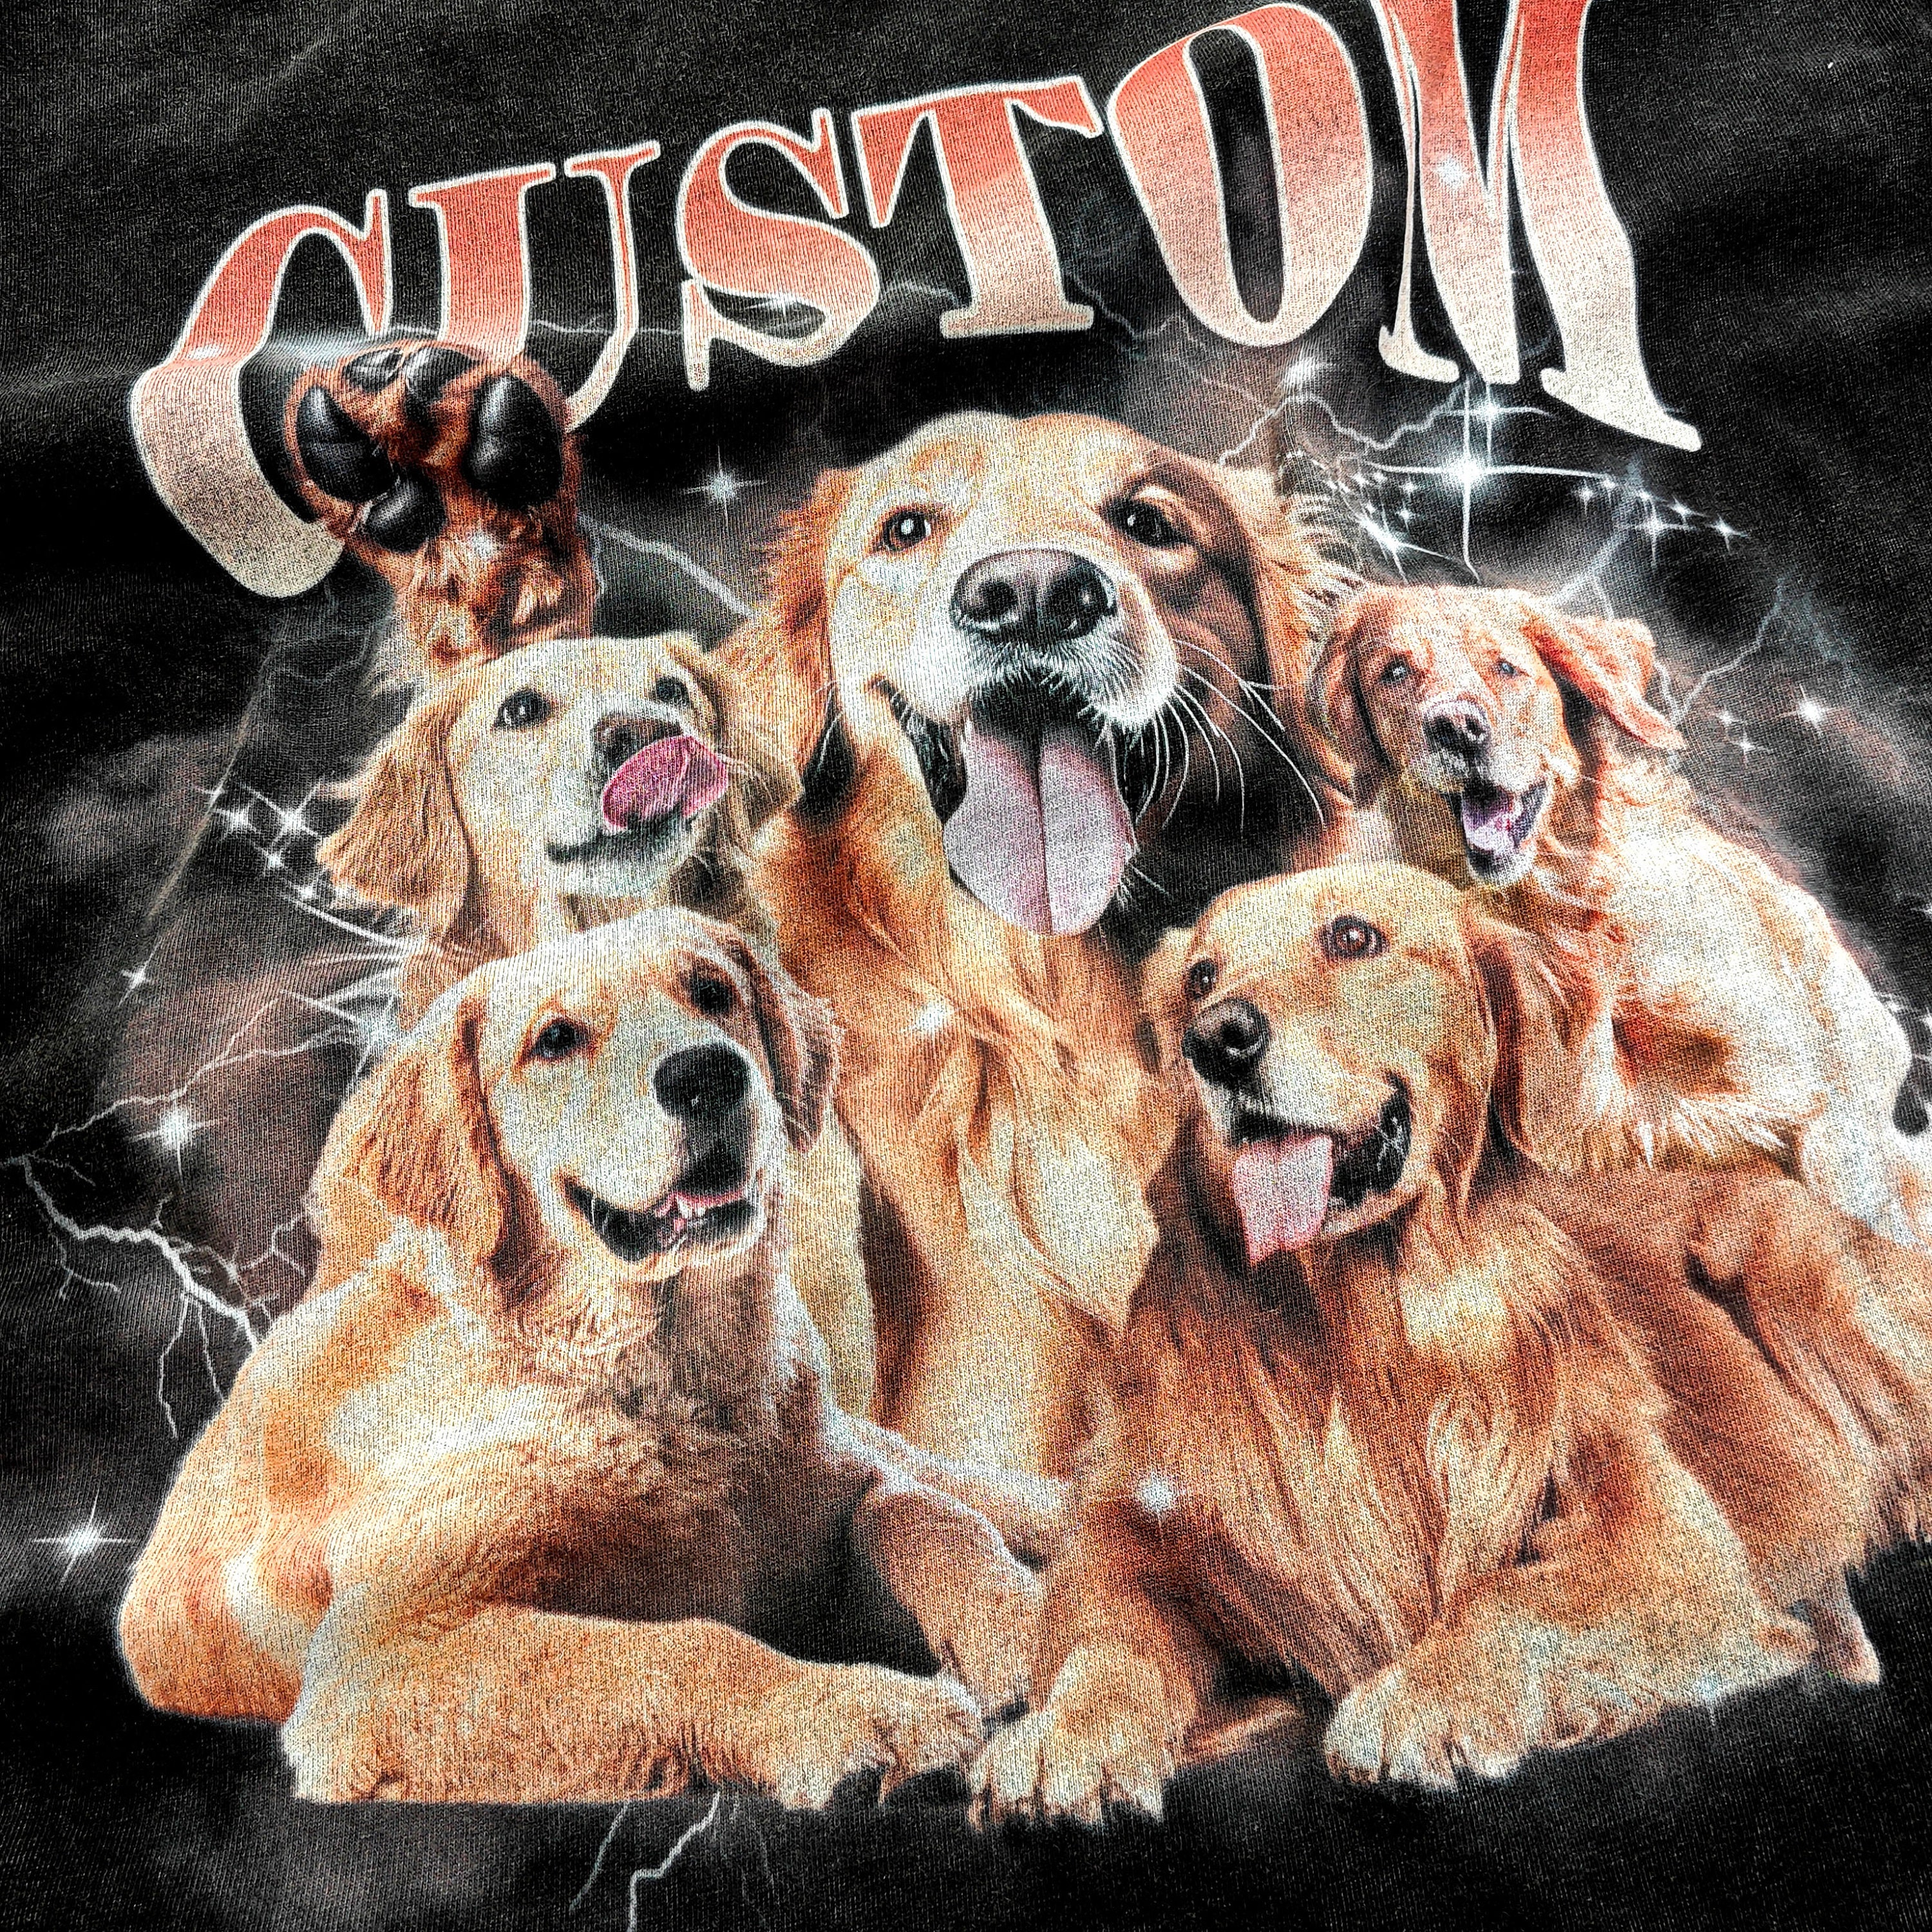 Custom Retro Shirt from Photo,Custom Pet Vintage